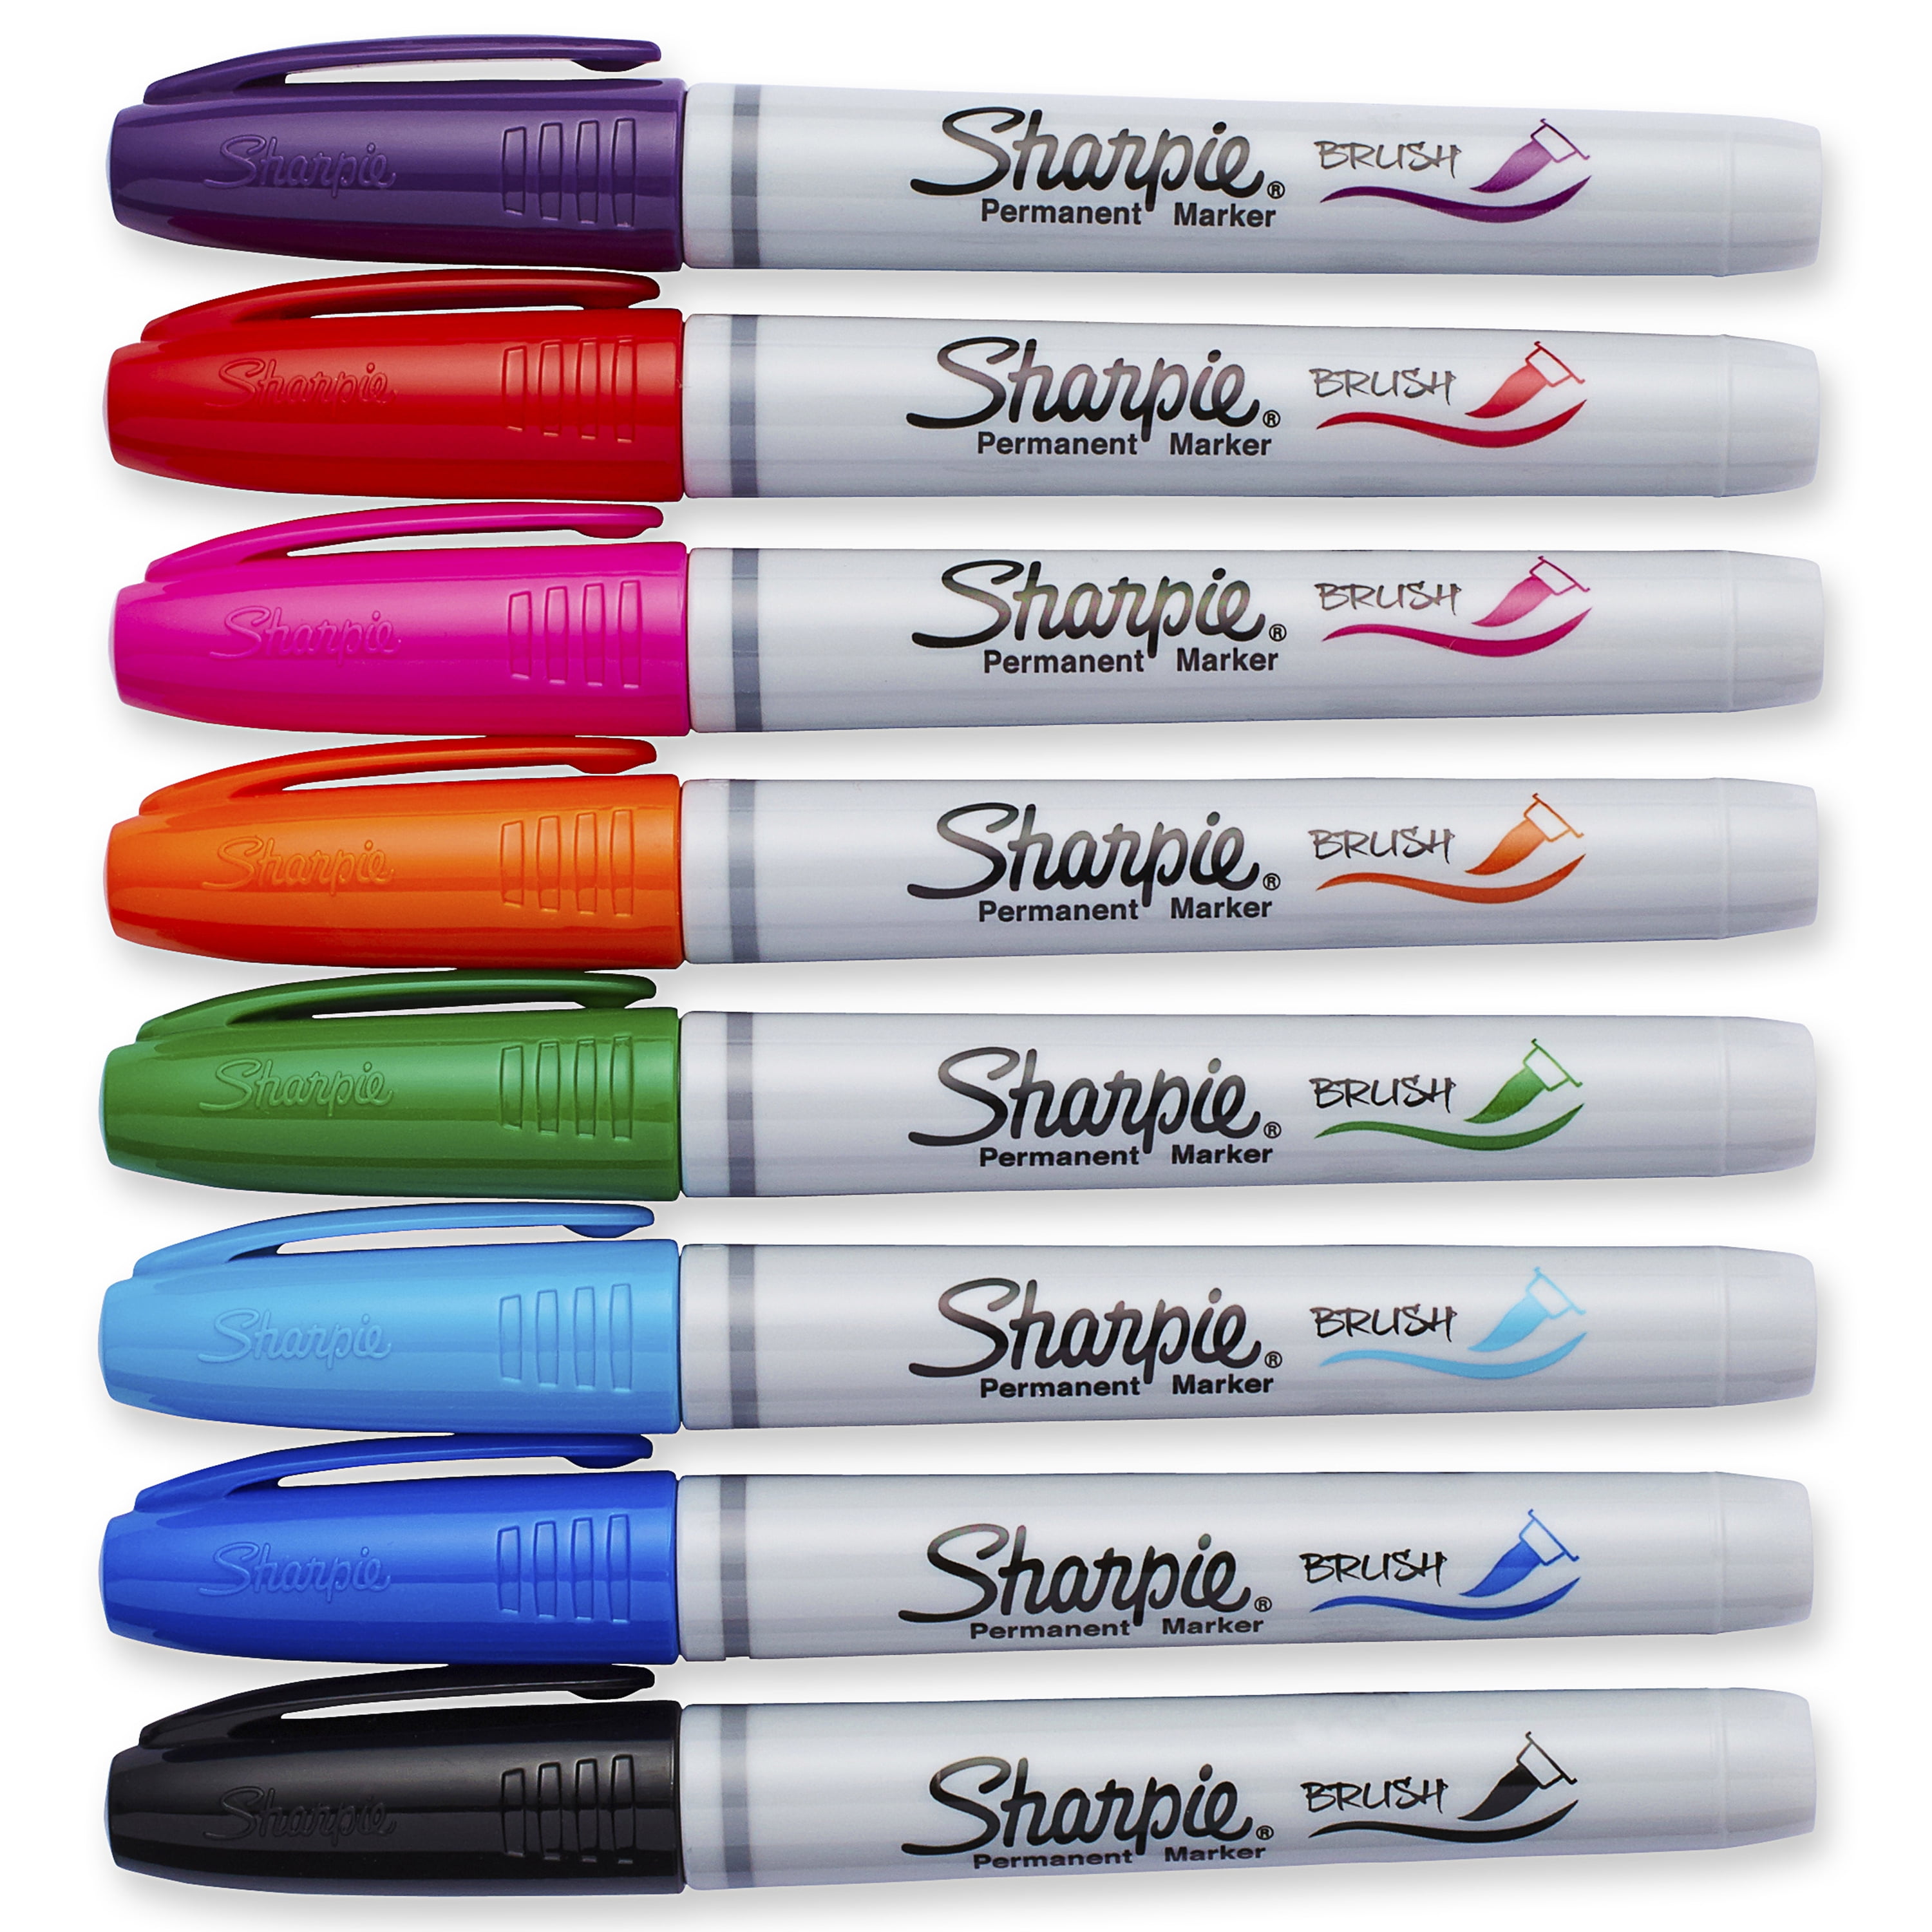 Sharpe Mfg Co Sharpie 2021536 Brush Tip Art Pens; Assorted Color